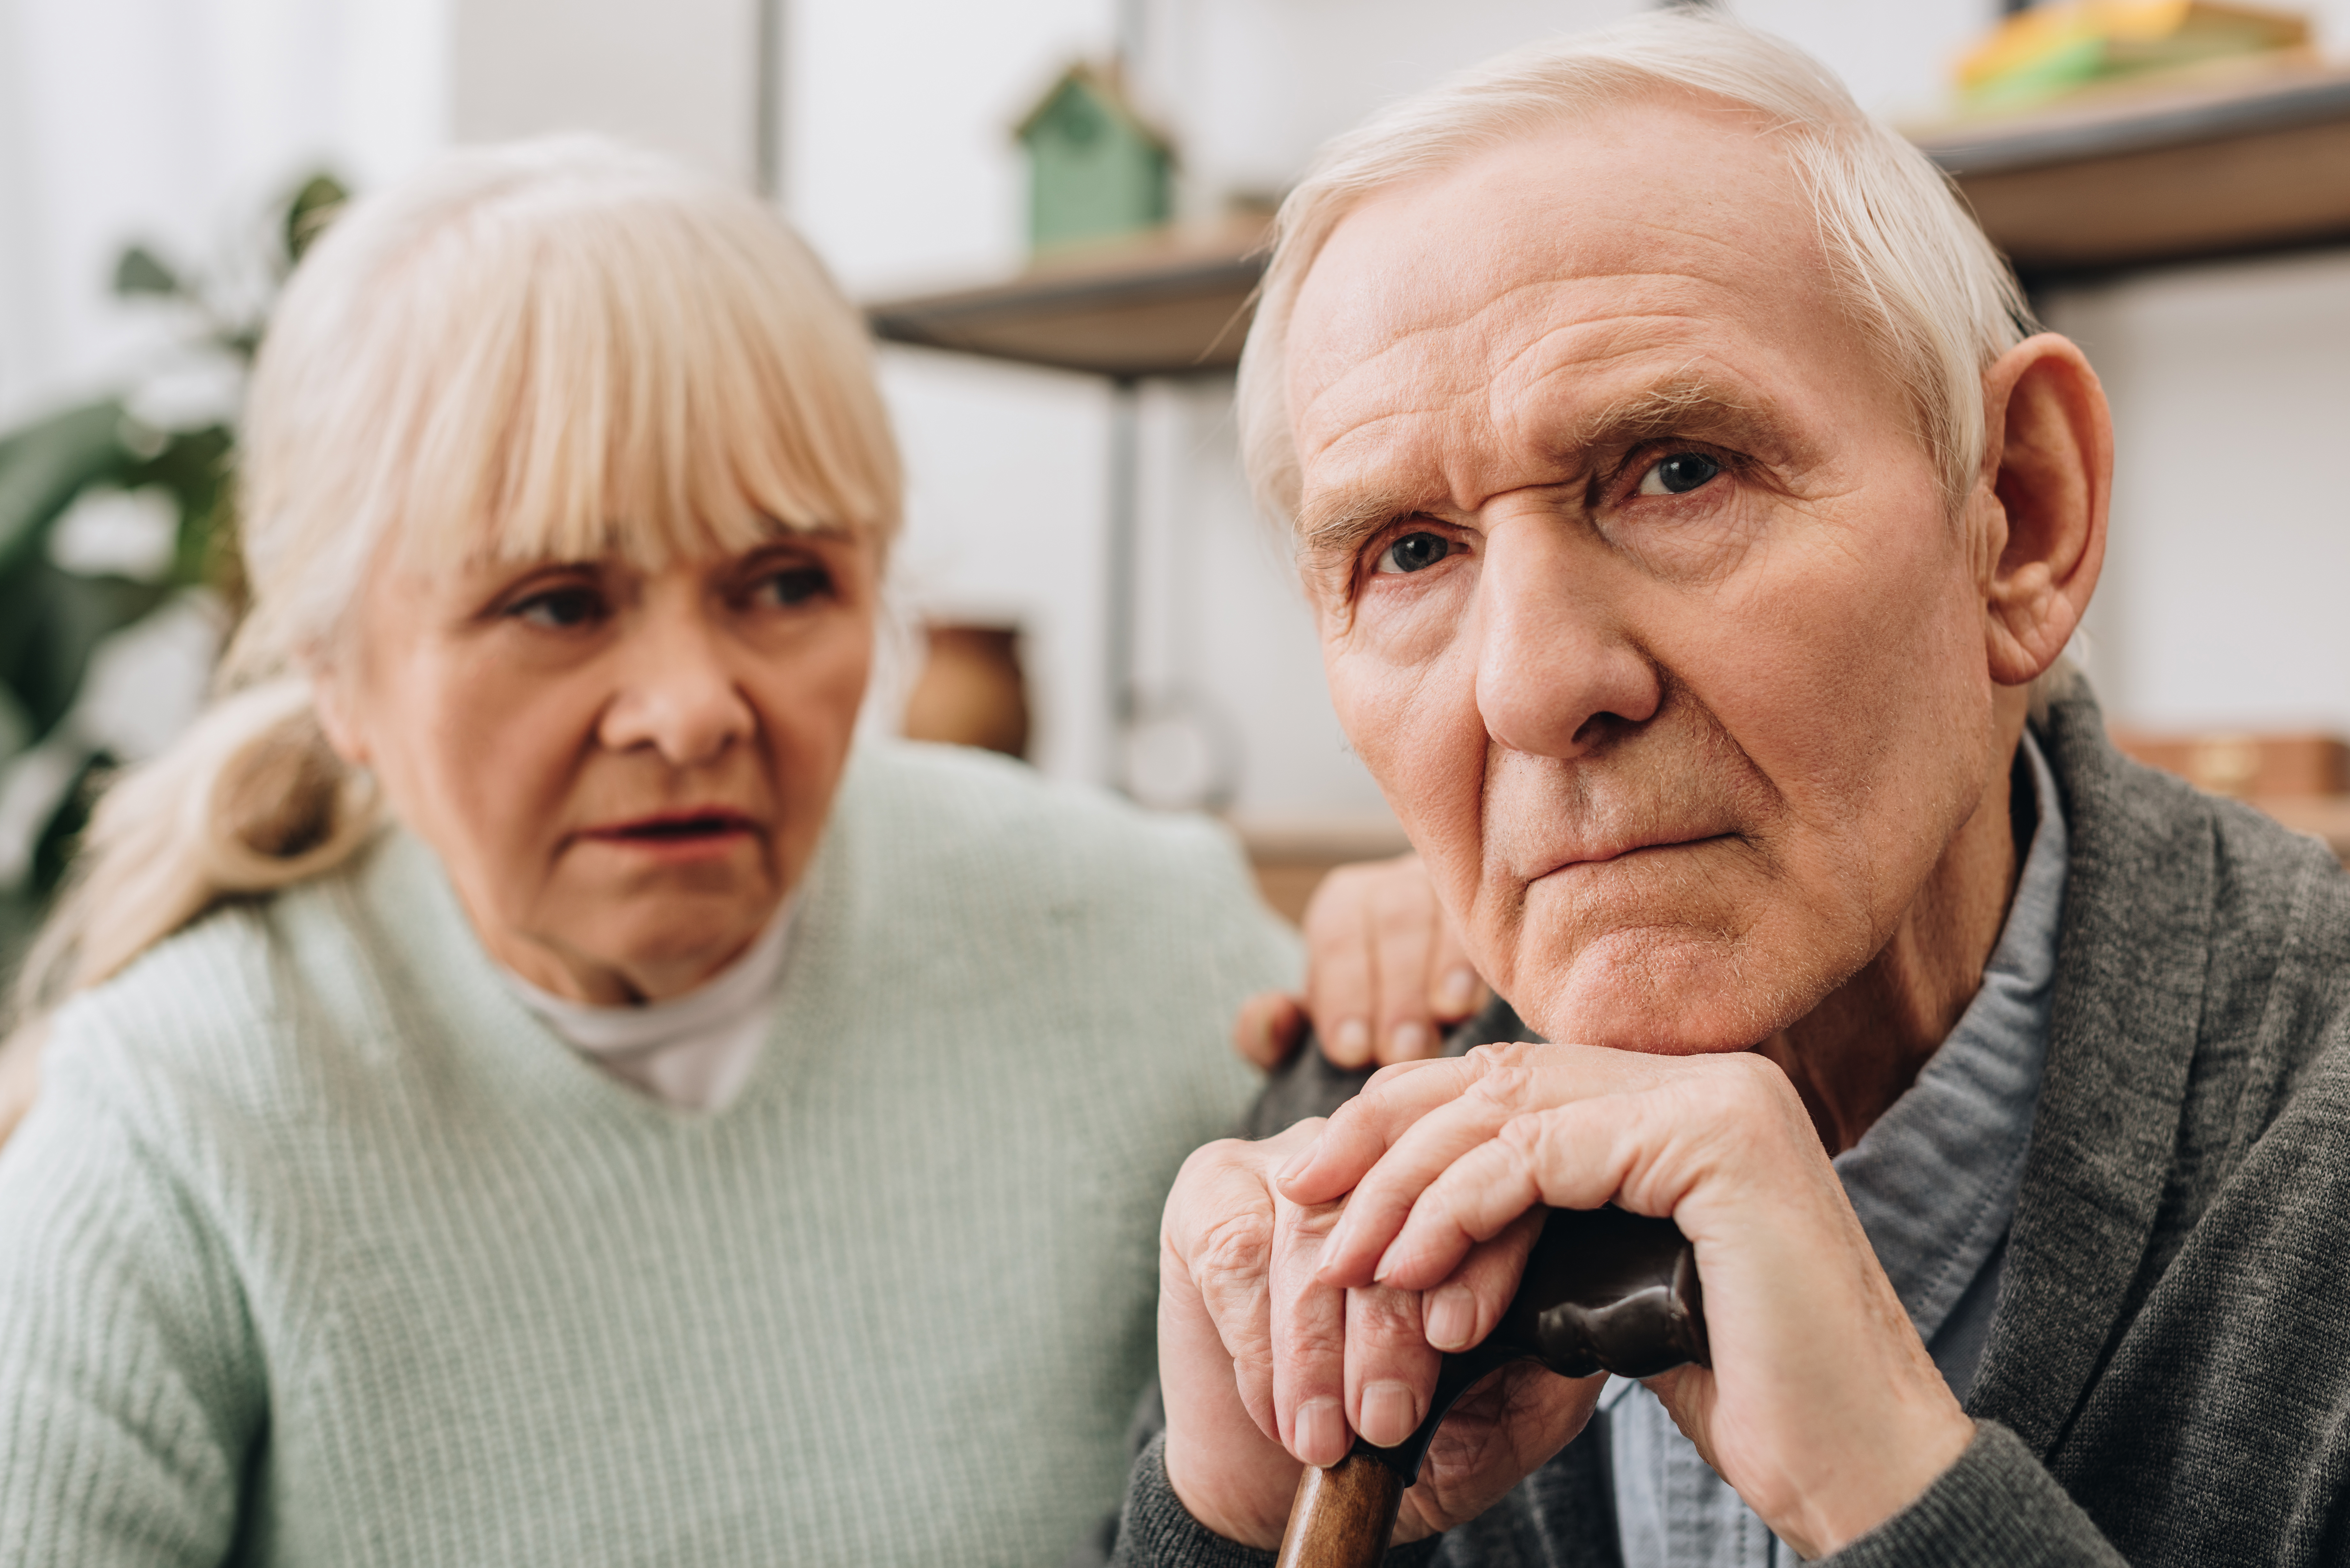 An older couple look thoughtful. Shutterstock image via user LightField Studio